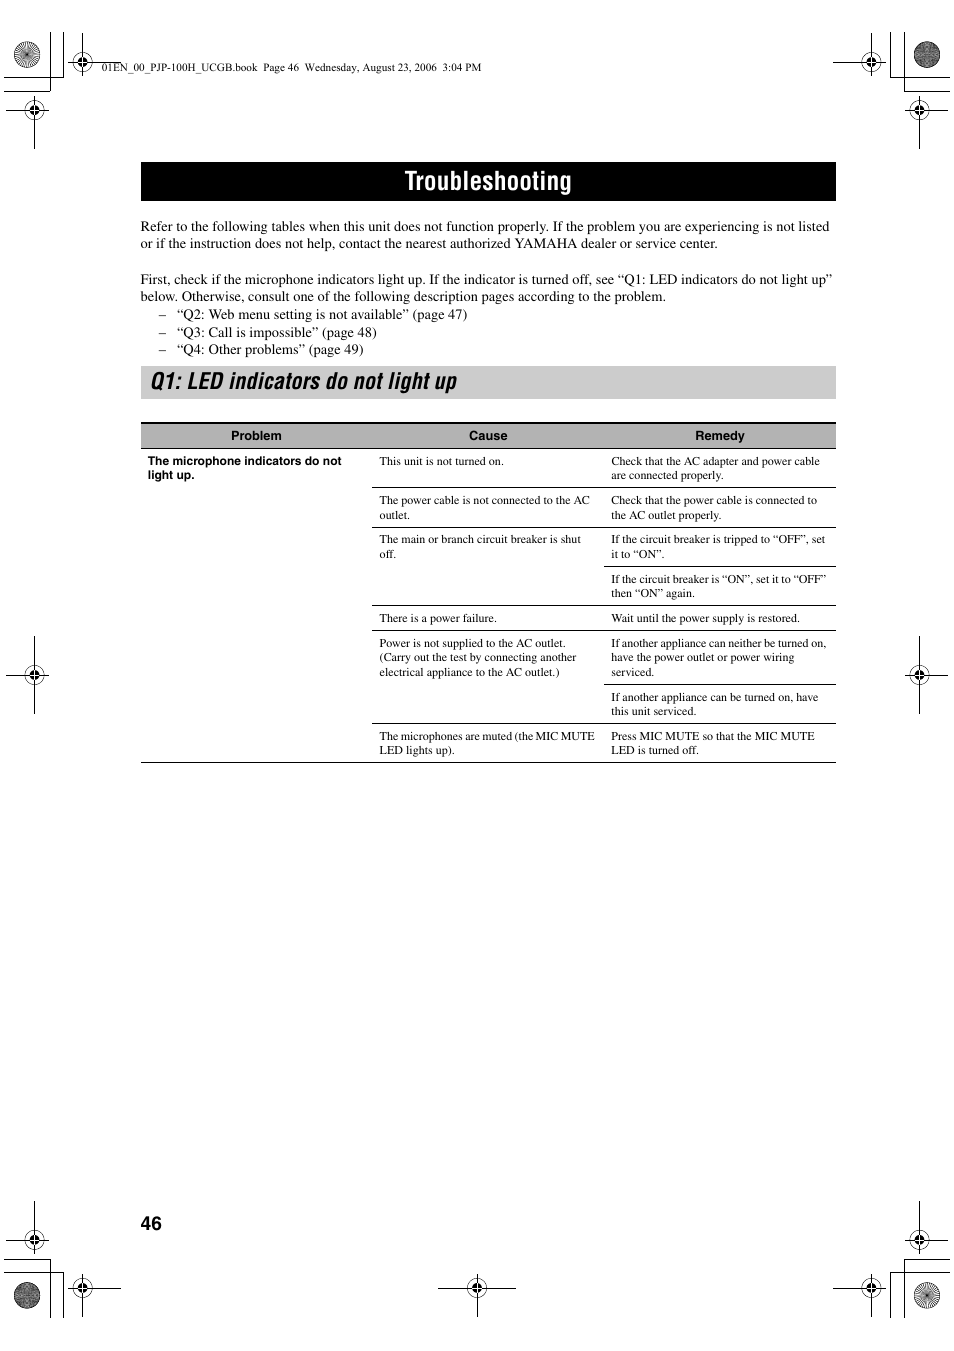 Troubleshooting, Q1: led indicators do not light up | Yamaha PJP-100H User Manual | Page 50 / 59